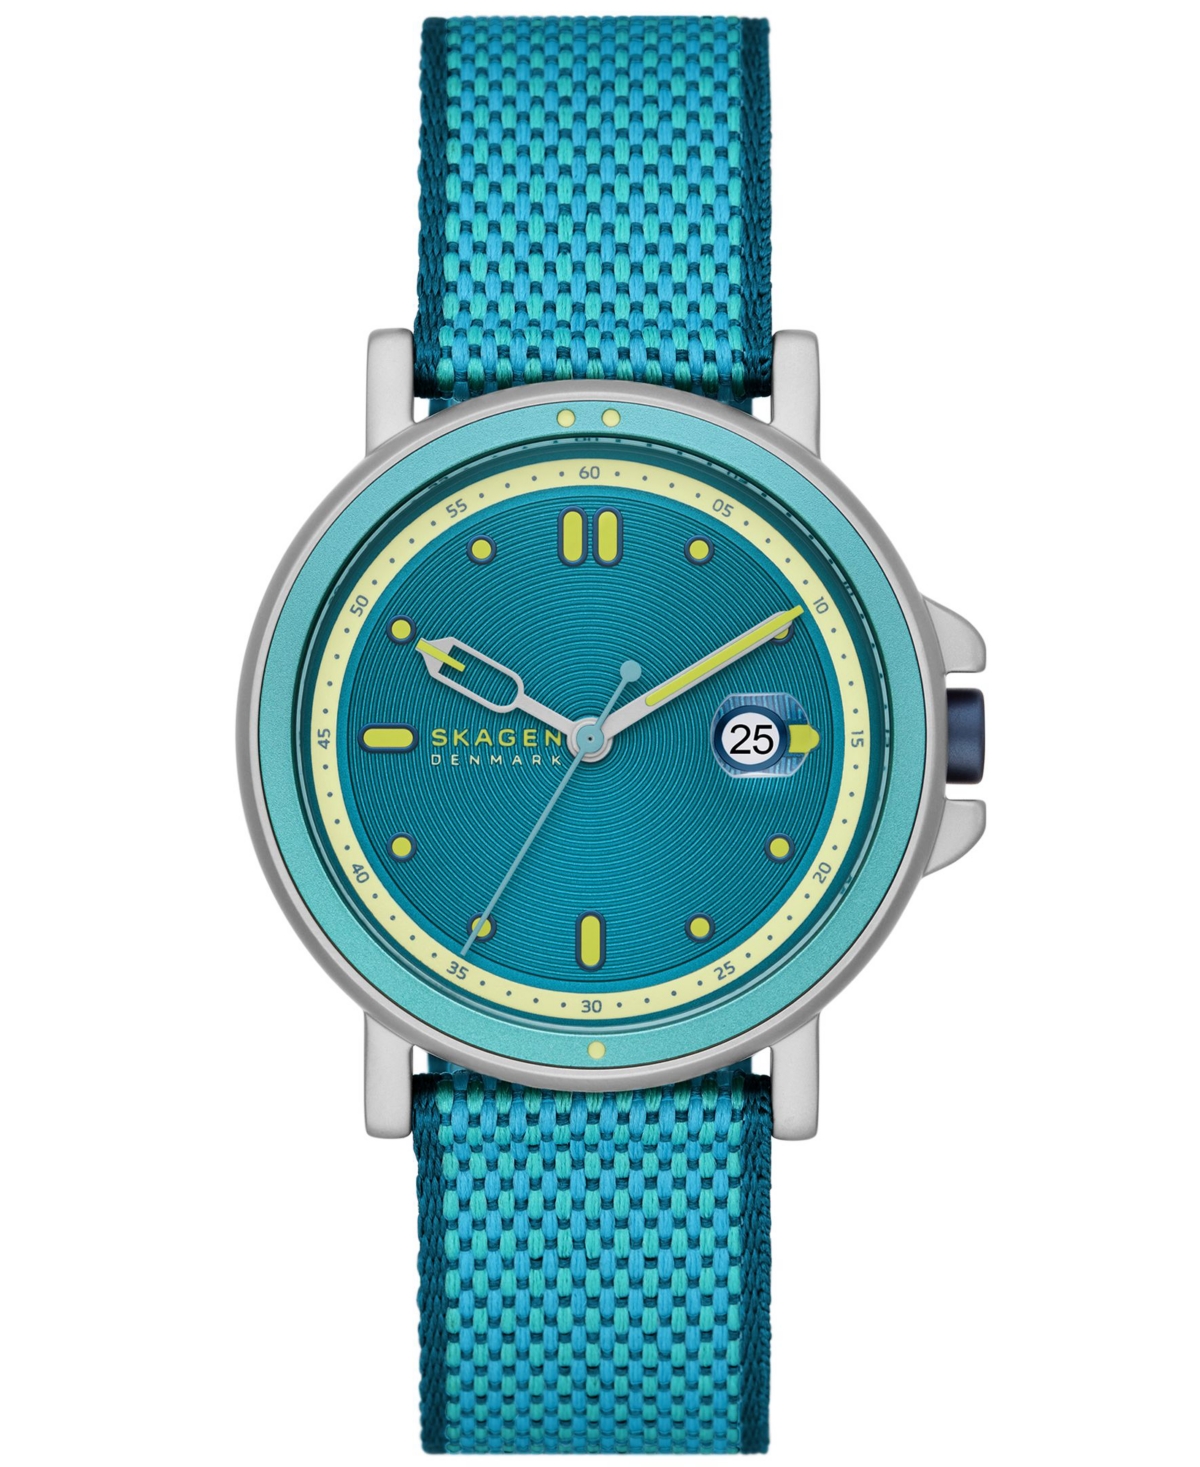 Skagen Men's Signatur Sport Le Three Hand Date Blue Pro-planet Plastic Watch 40mm